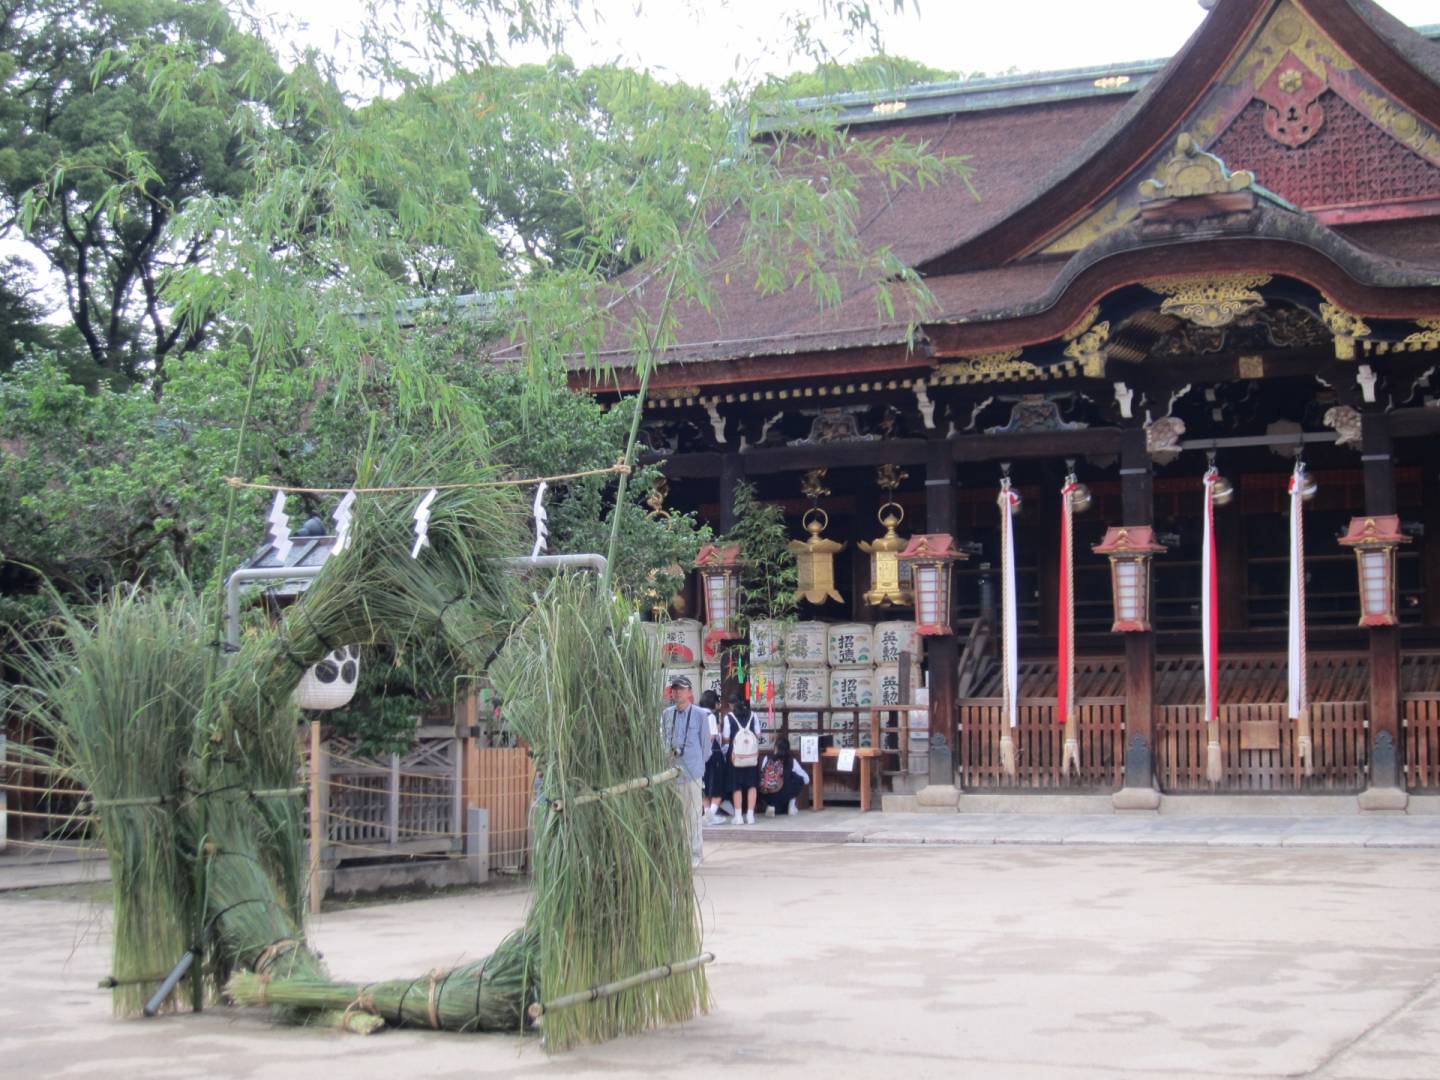 nagoshi no harae 夏越の祓 Japan Ritual Shinto Kultur Tradition